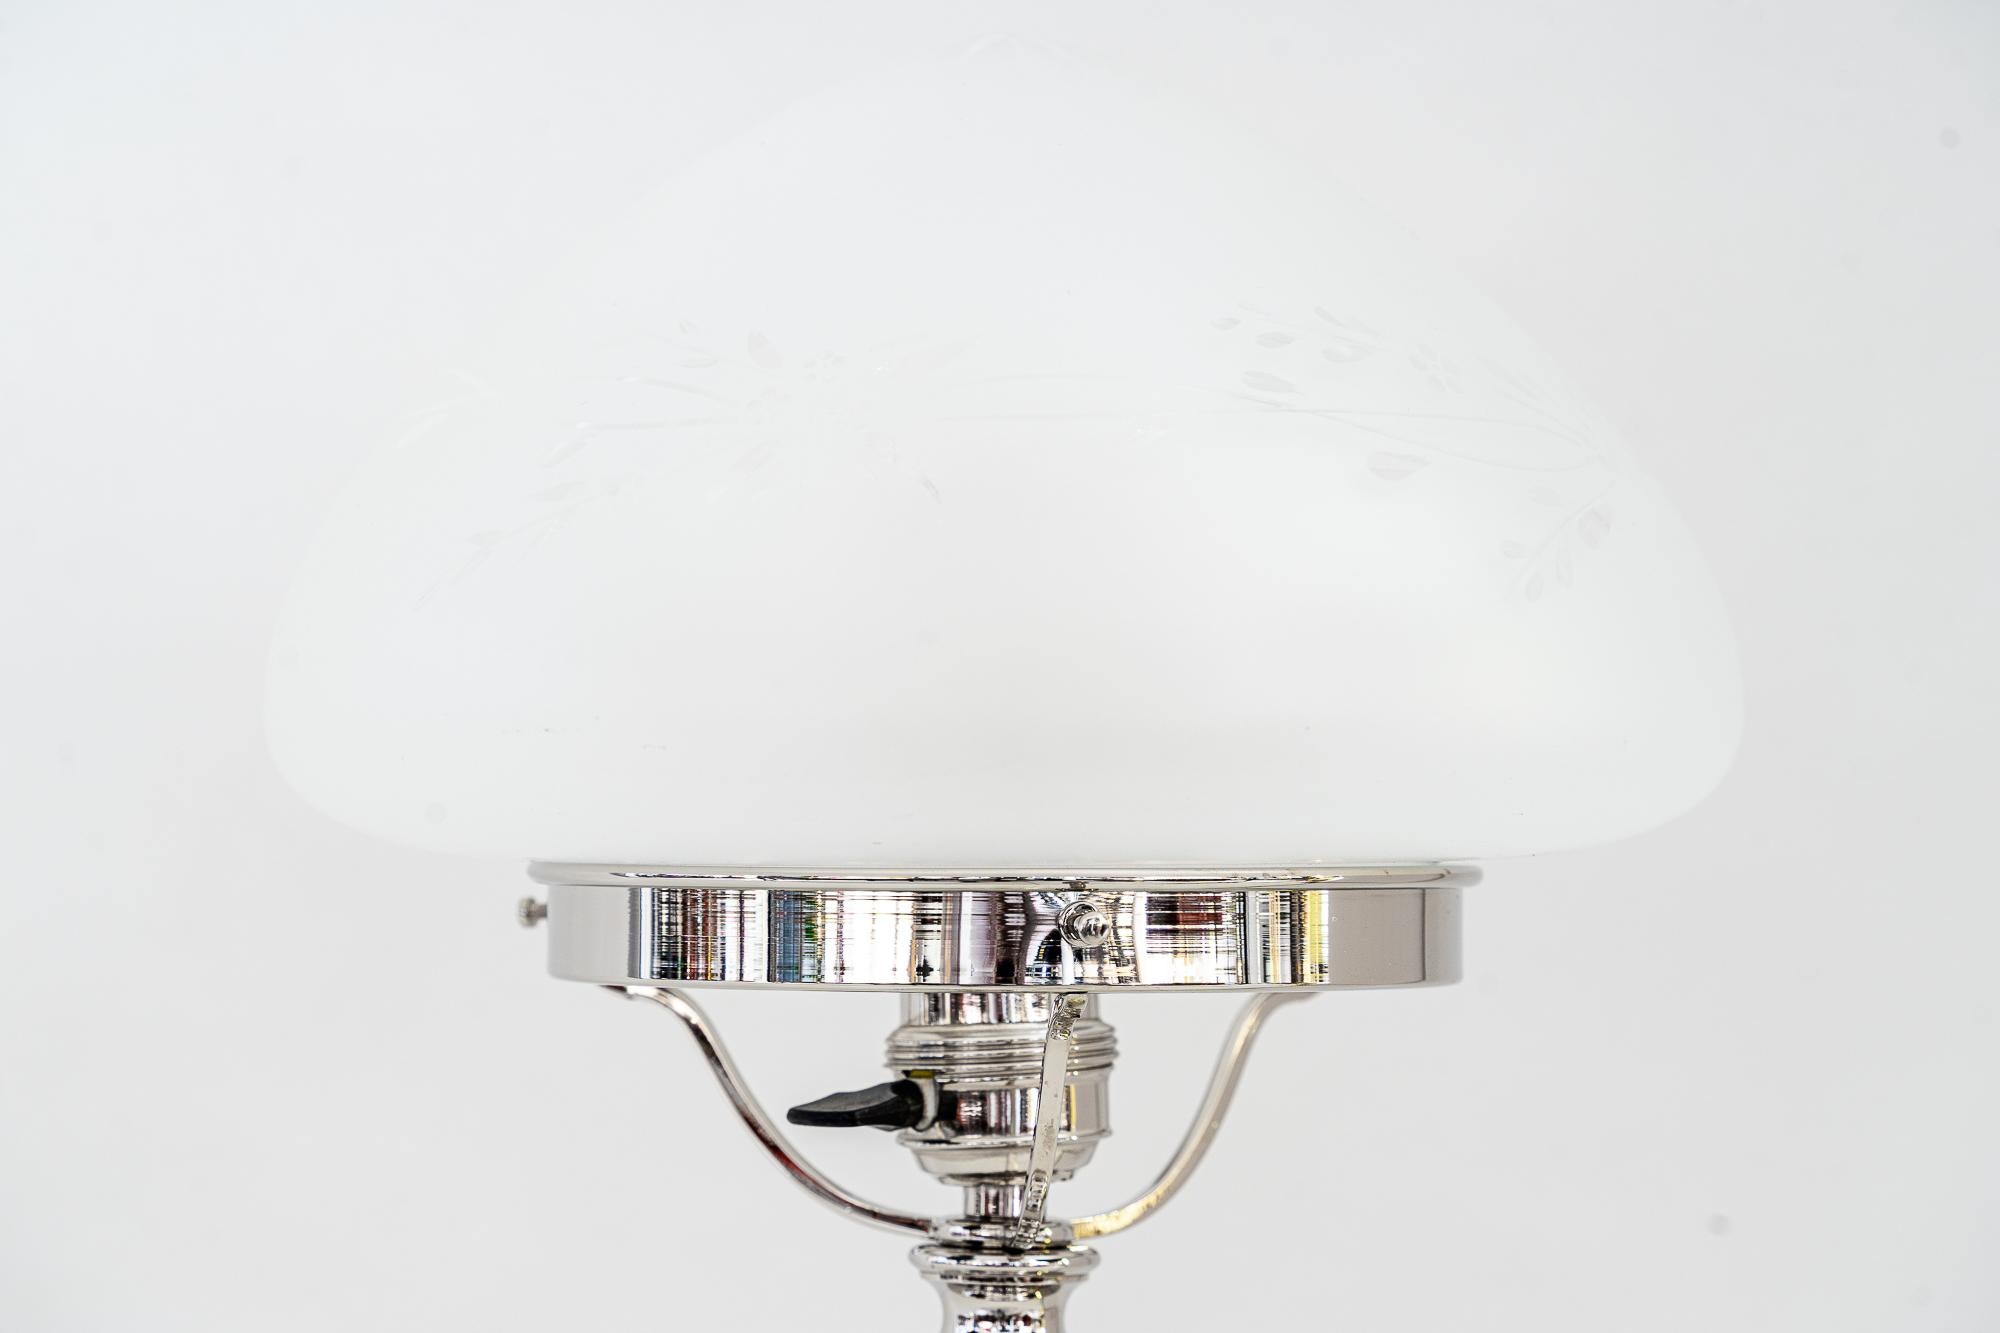 Art Deco nickel-plated Table lamp vienna around 1920
Nickel- plated
Original glass shade.